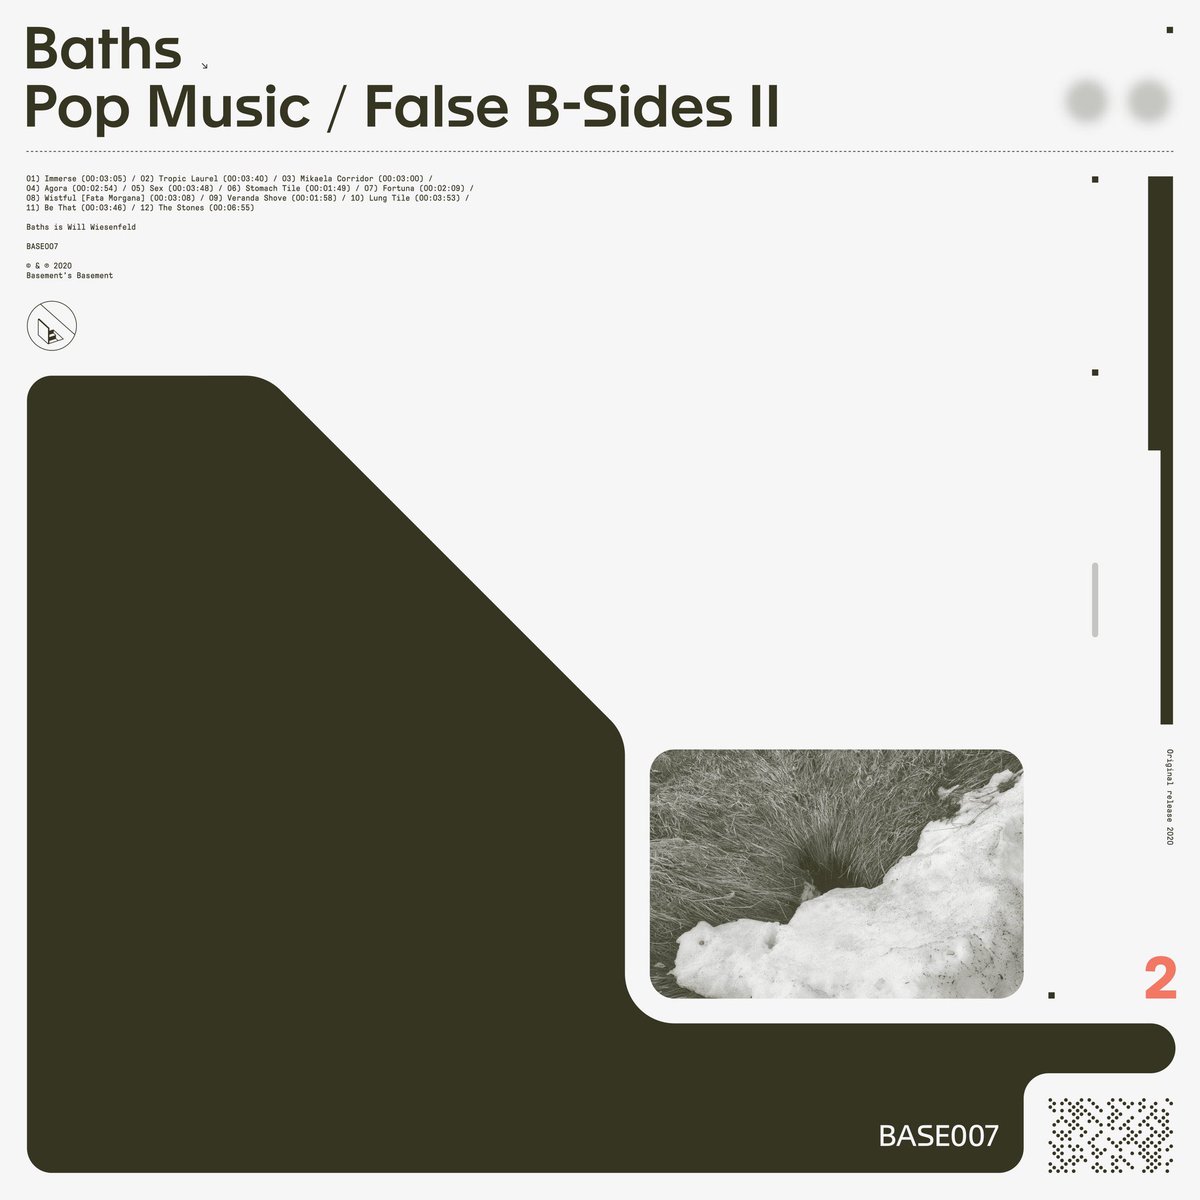 BATHSPop Music / False B-SidesPop Music / False B-Sides II https://smarturl.it/Mikaela MAY 29, 2020INTL: Basement’s BasementPM/FBS 1 [digi+vinyl]PM/FBS 2 [digi+vinyl]JAPAN:  @tugboatrecords PM/FBS 1 [digi]PM/FBS 2 [digi+CD]AUS & NZ:  @havegoodmannersPM/FBS 2 [digi]